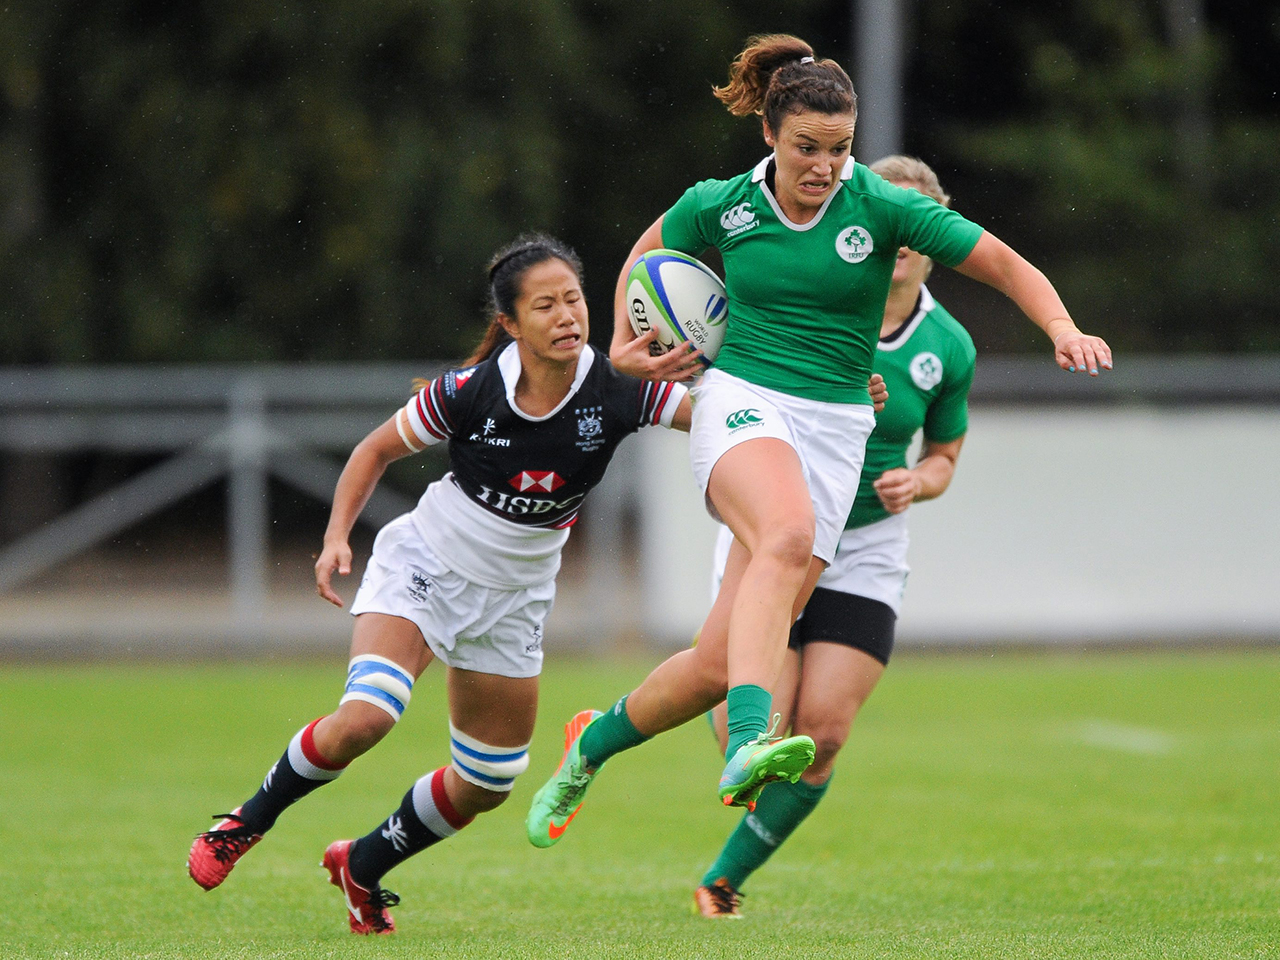 Louise Galvin, Ireland, is tackled by Wai Sum Sham, Hong Kong. Women's Sevens Rugby Tournament, Pool C, Ireland v Hong Kong. UCD, Belfield, Dublin